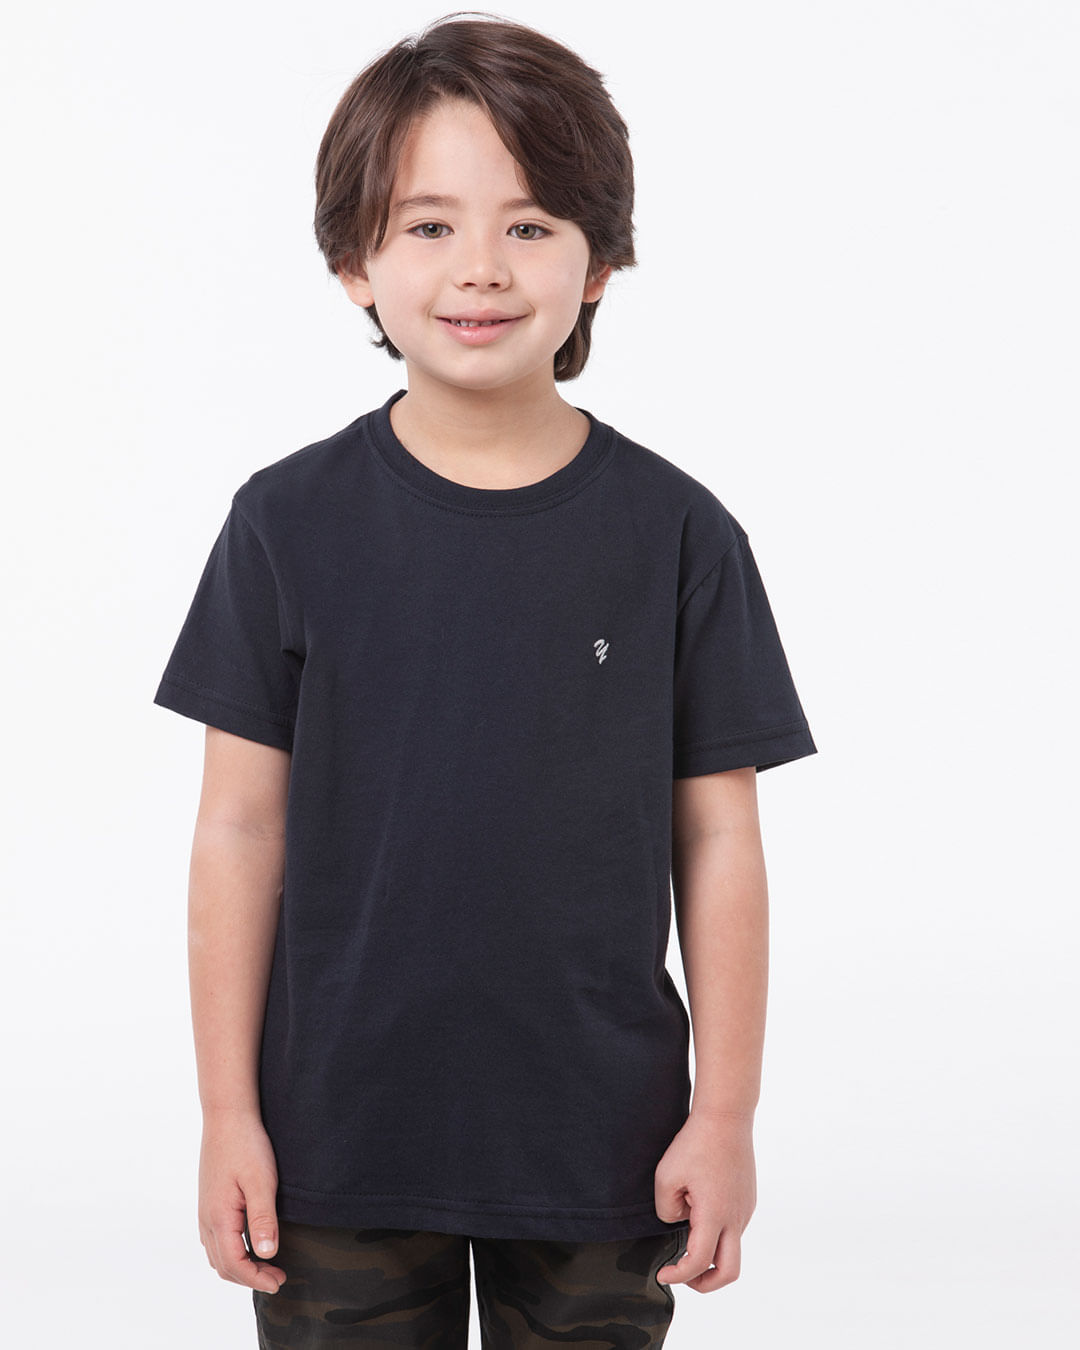 Camiseta-Infantil-Lisa-Basica-Preta